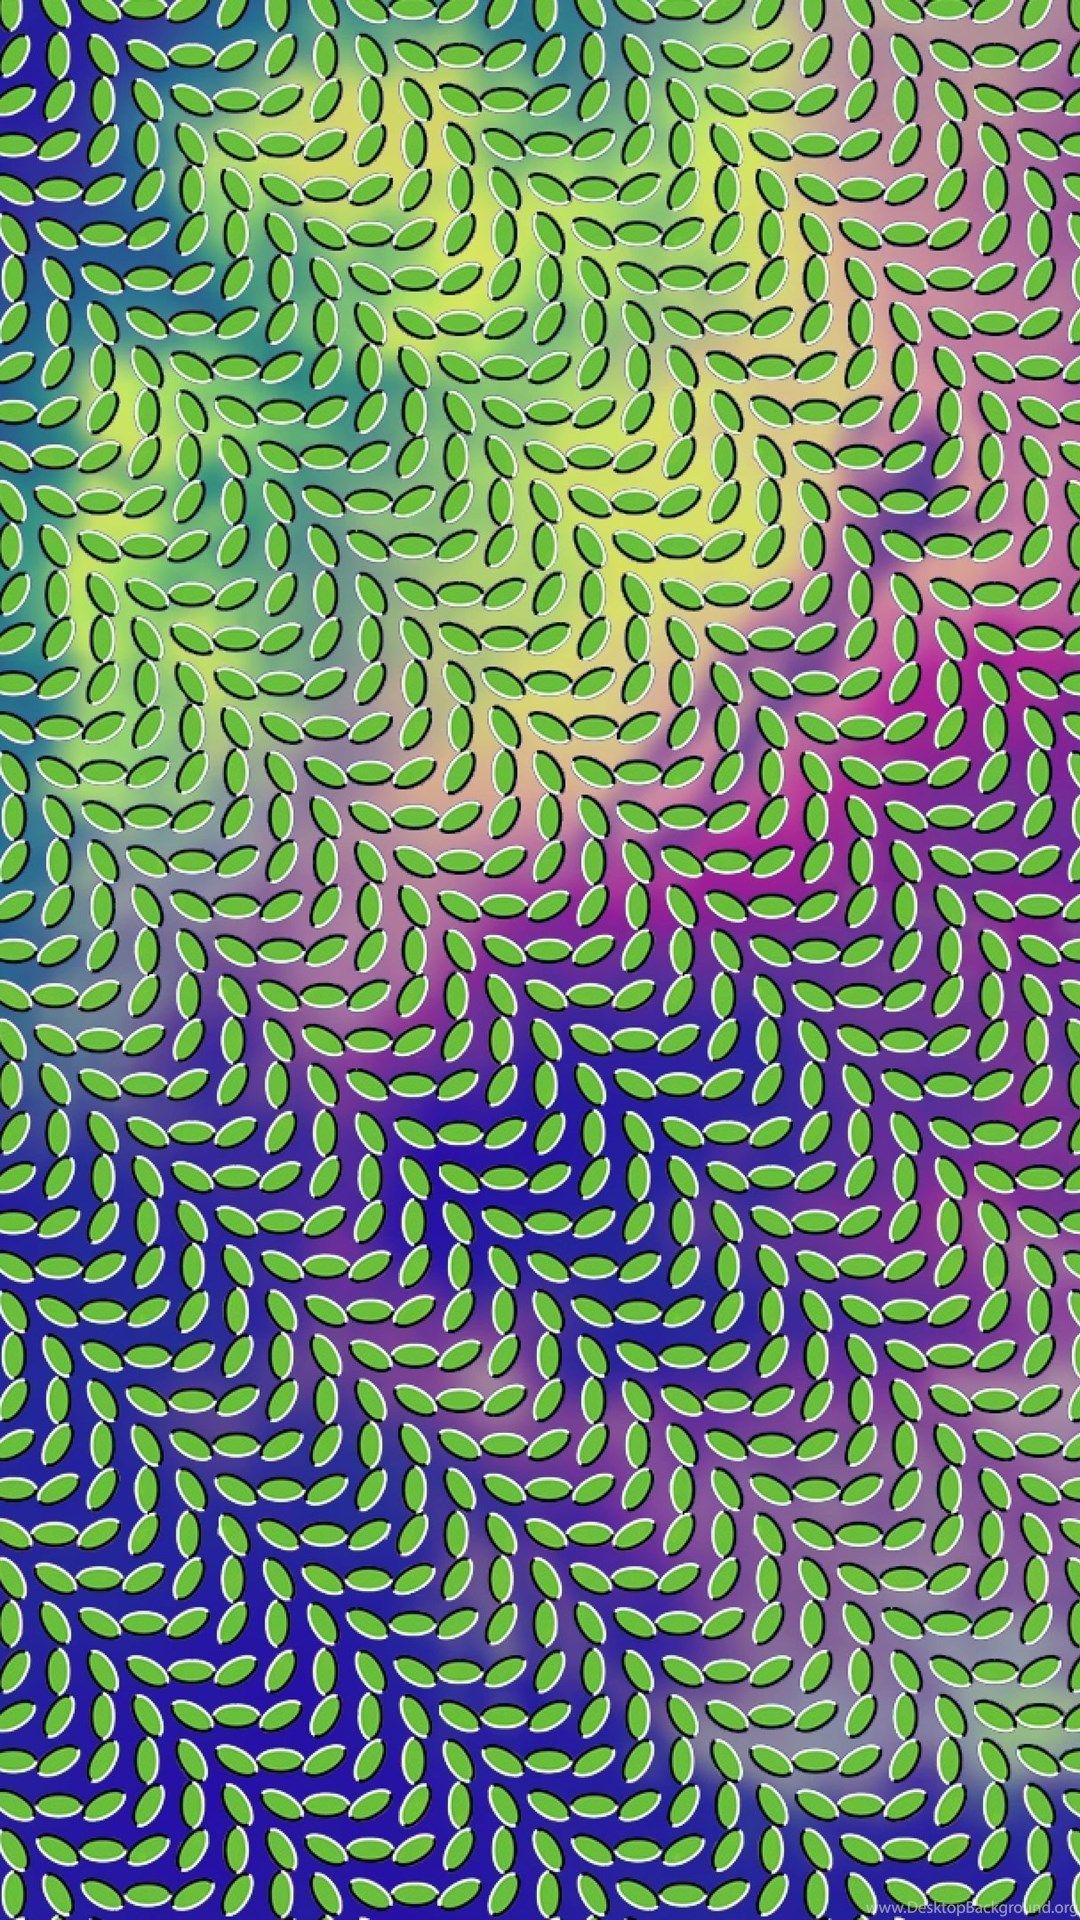 Optical Illusion Wallpaper Iphone 6 - 1080x1920 Wallpaper 